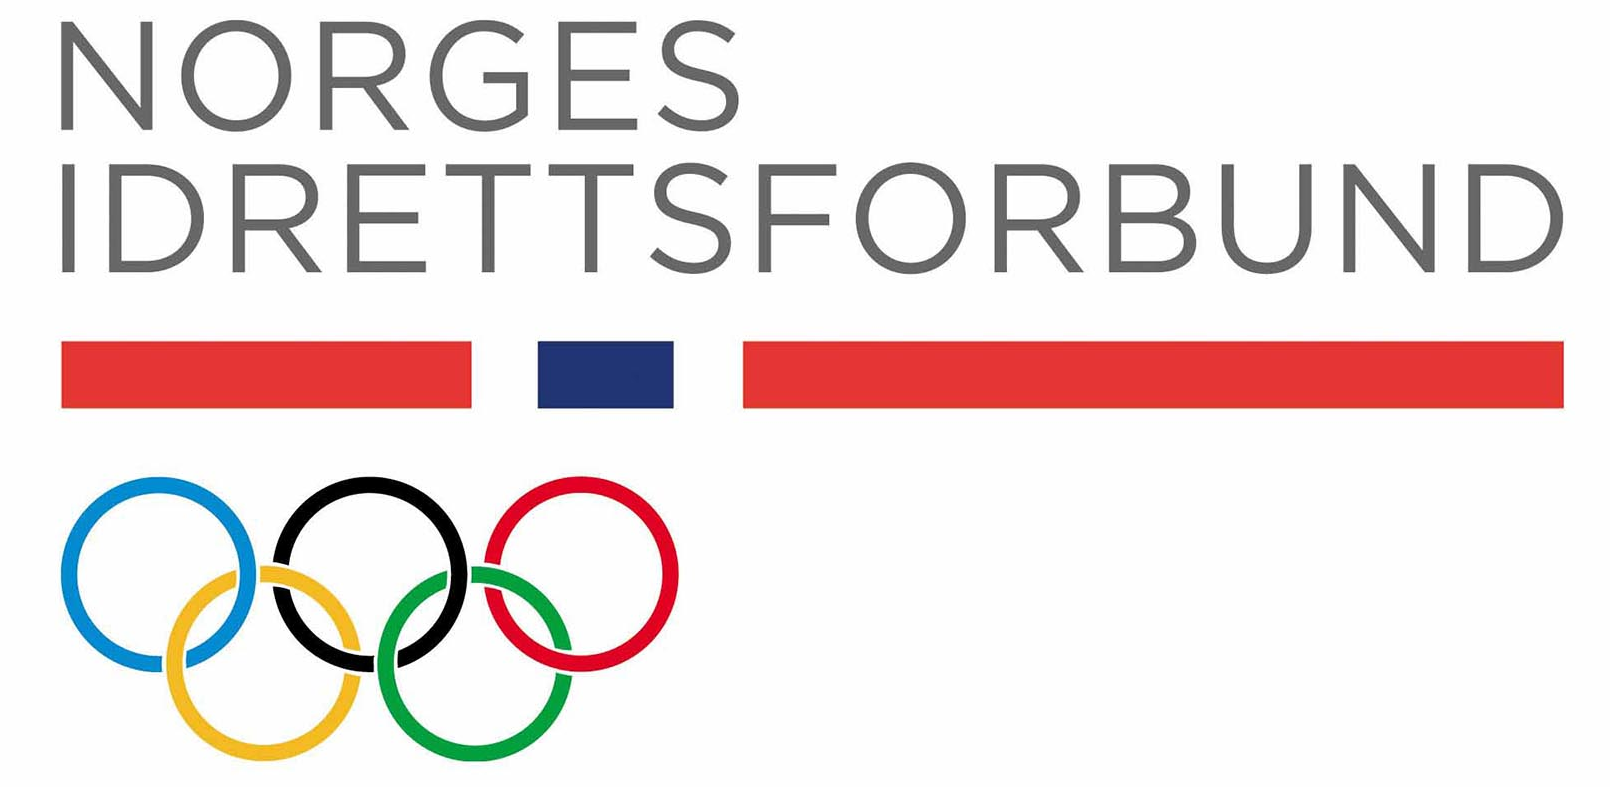 Norges idrettsforbund logo 